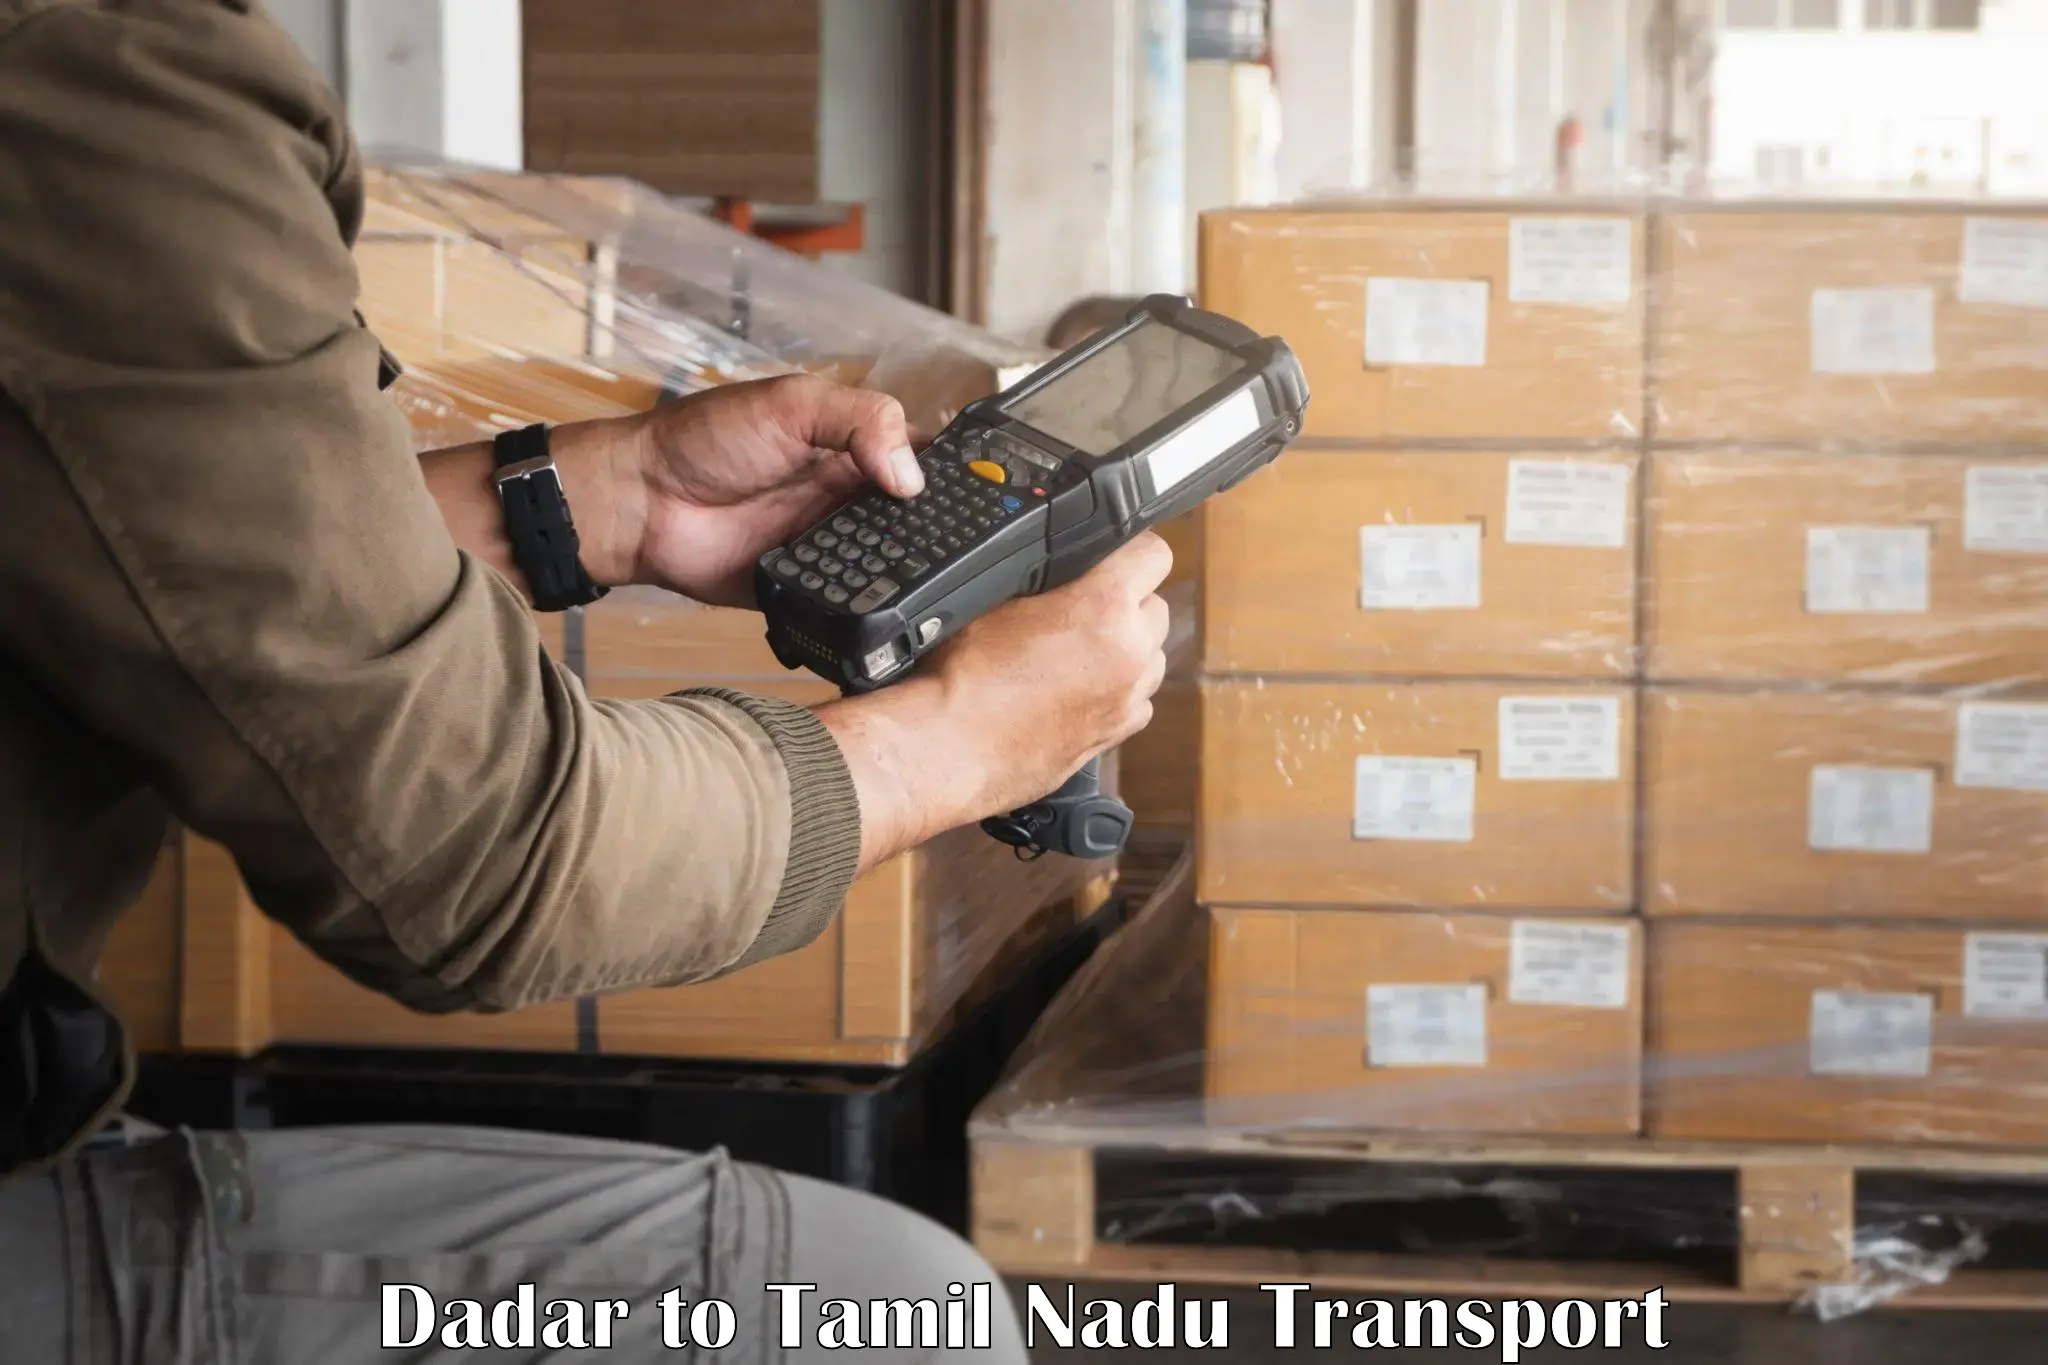 Shipping partner Dadar to Musiri